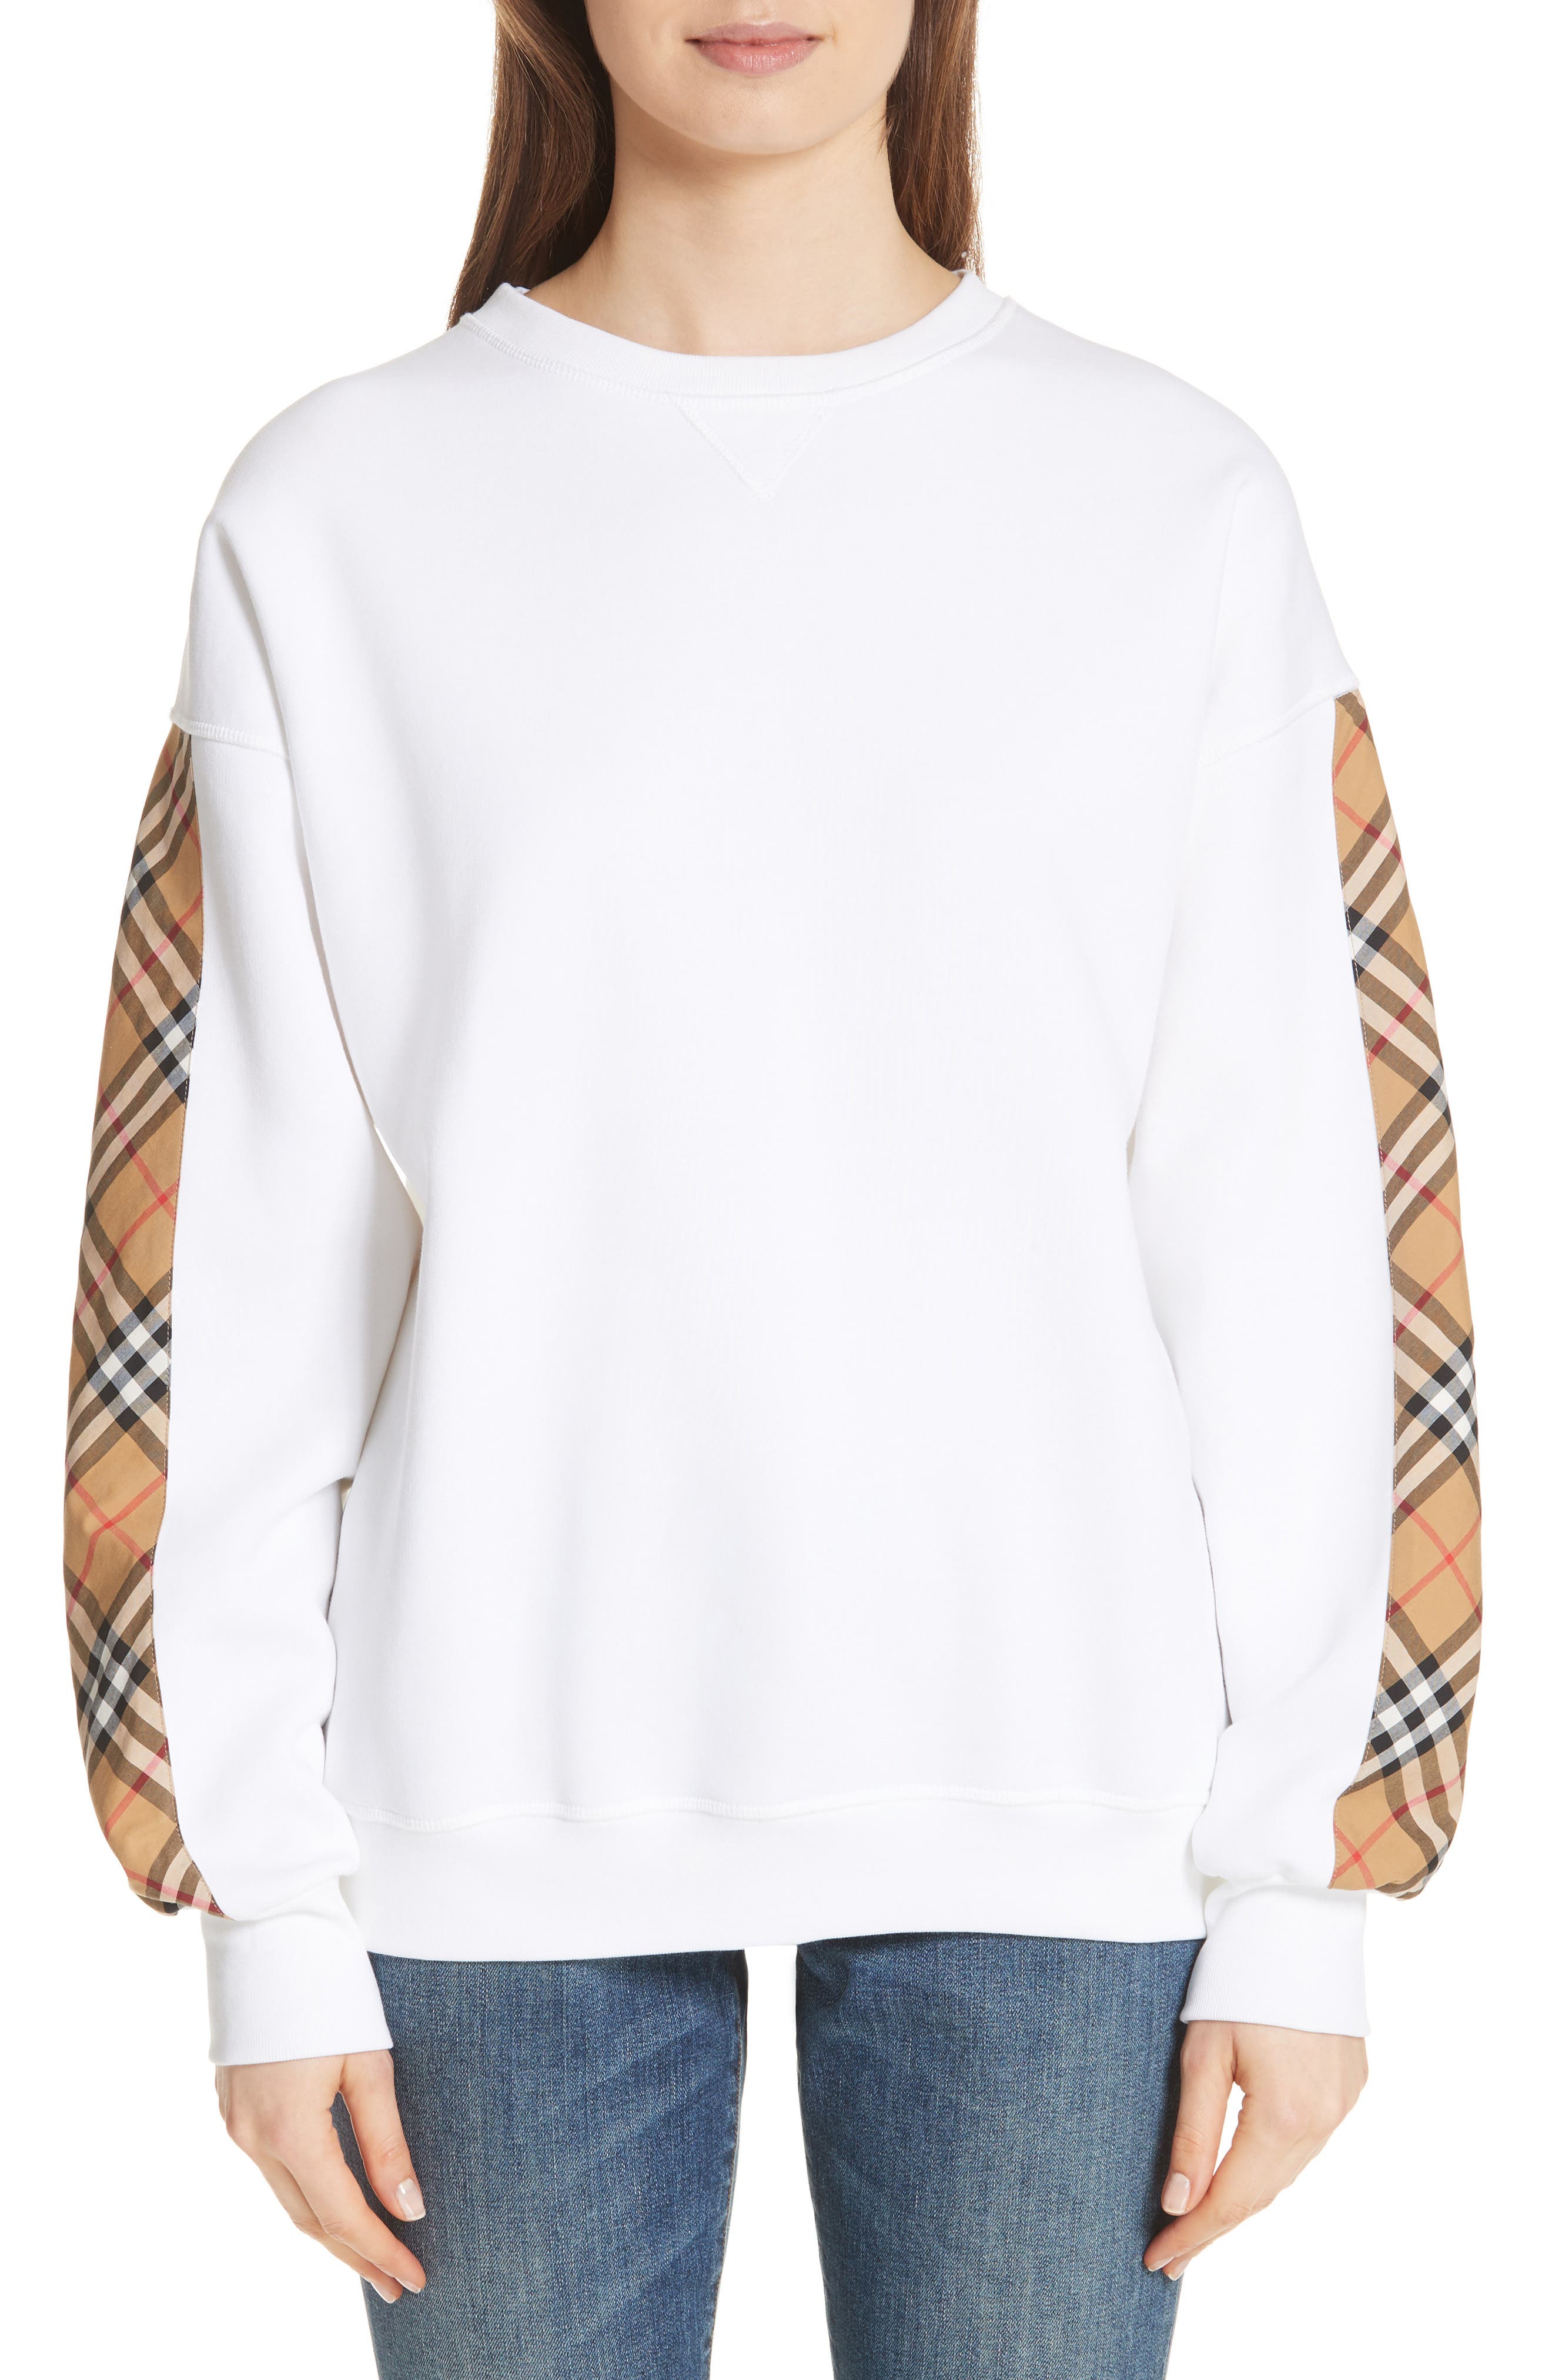 burberry sweater white